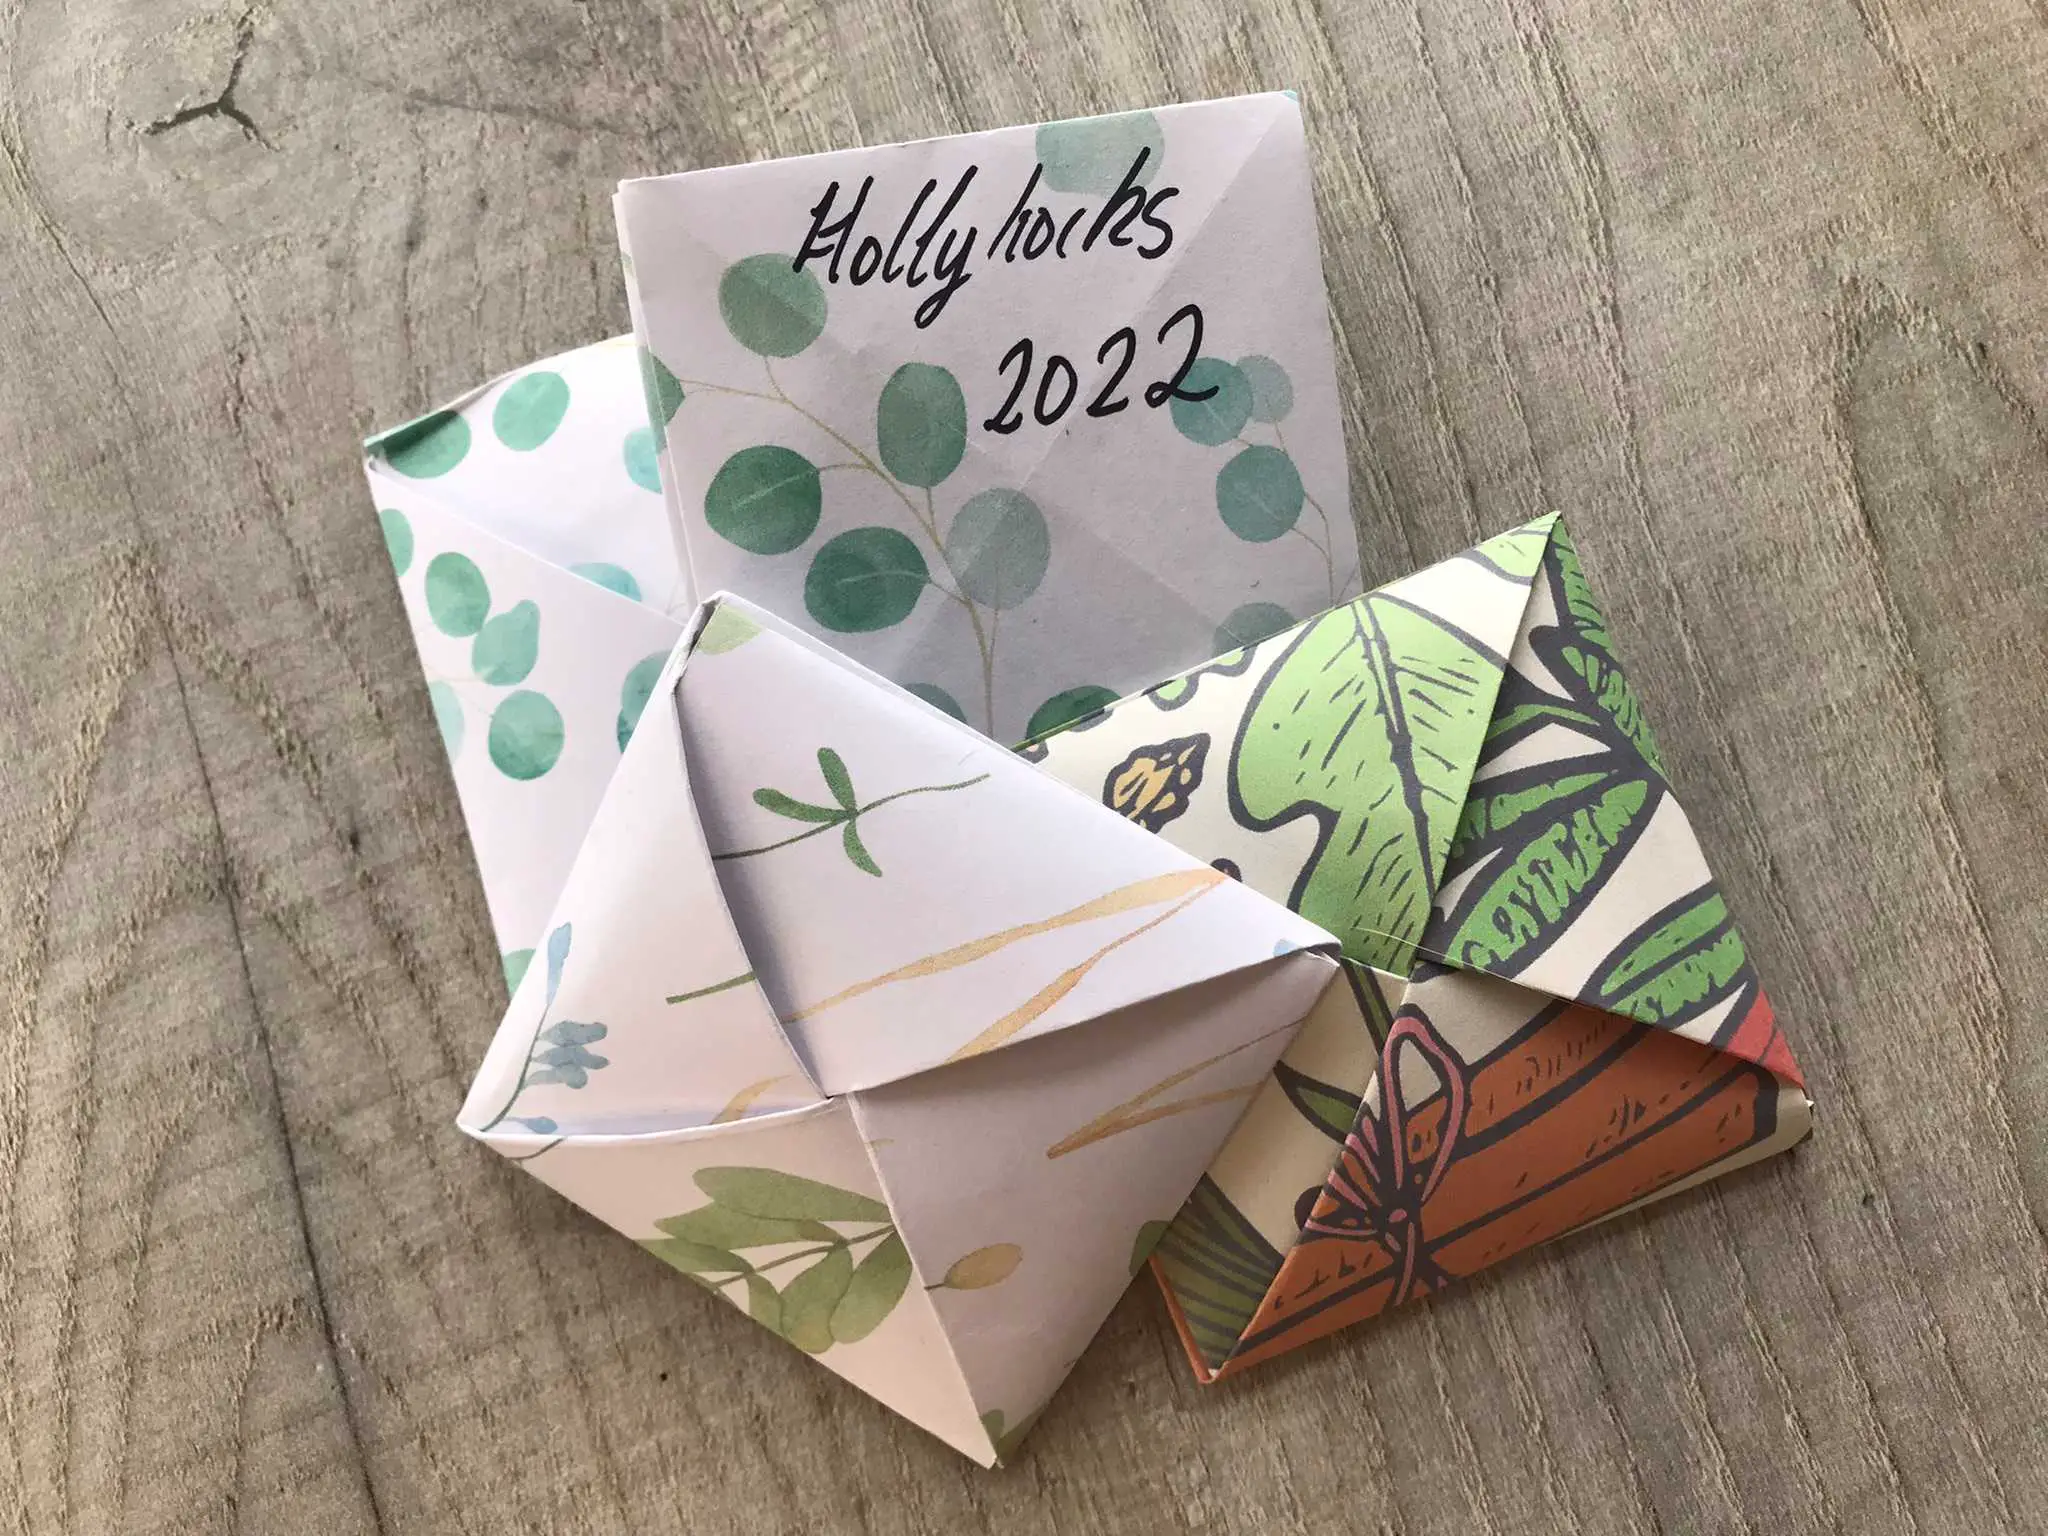 Cute Mini Paper Handbag - Easy Origami Tutorial